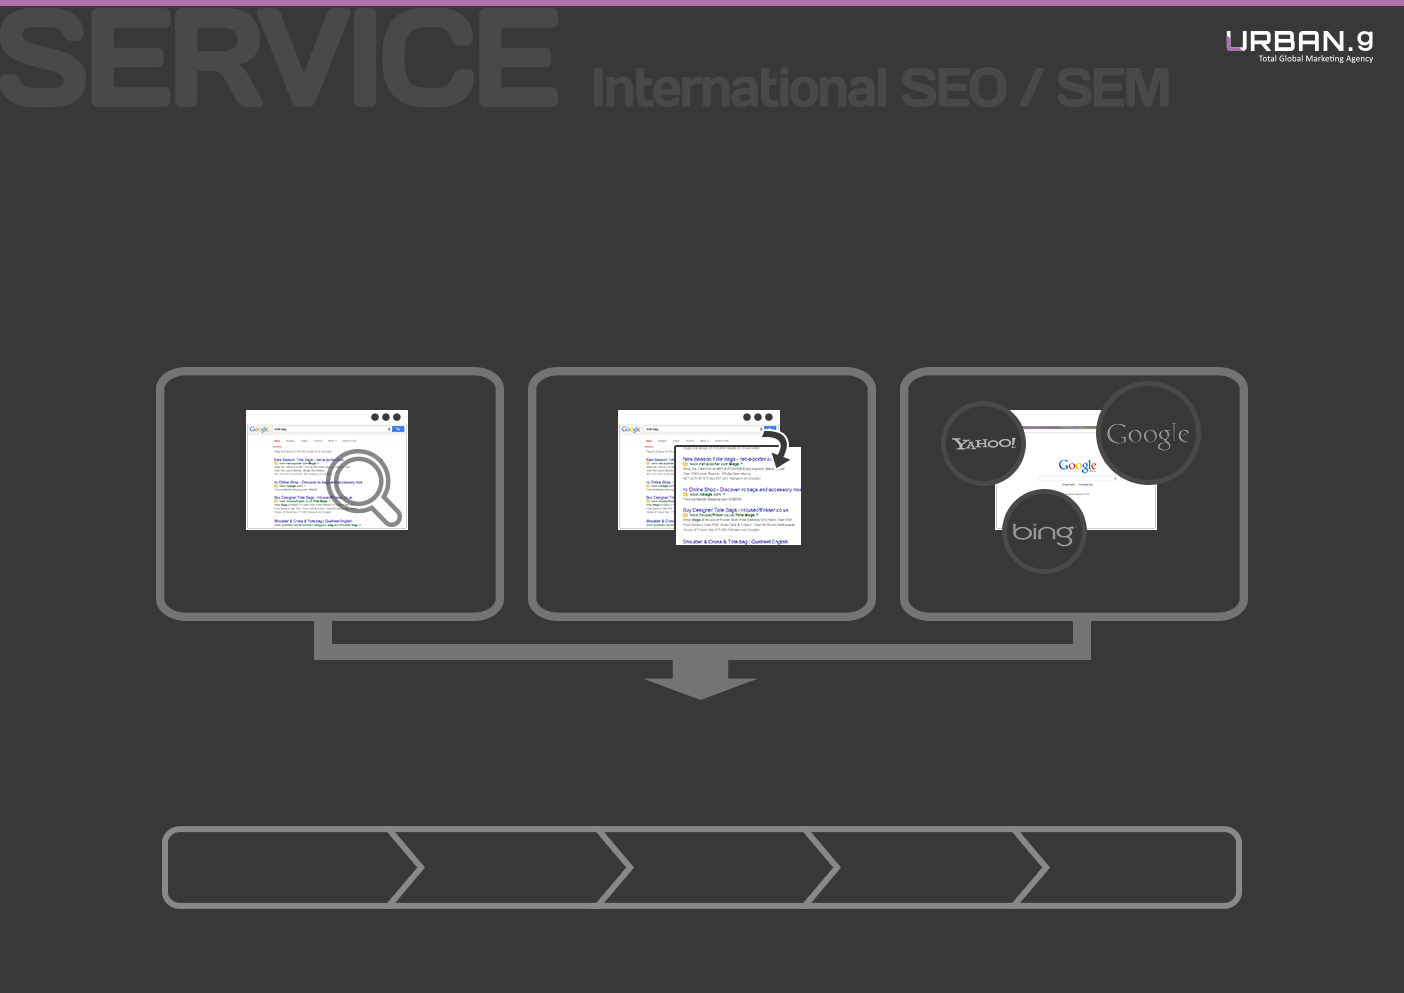 SEM (Search Engine Marketing) 키워드 광고, 검색엔진최적화 등을 통해 검색엔진에서 사이트나 제품을 상위에 노출키는 서비스입니다.